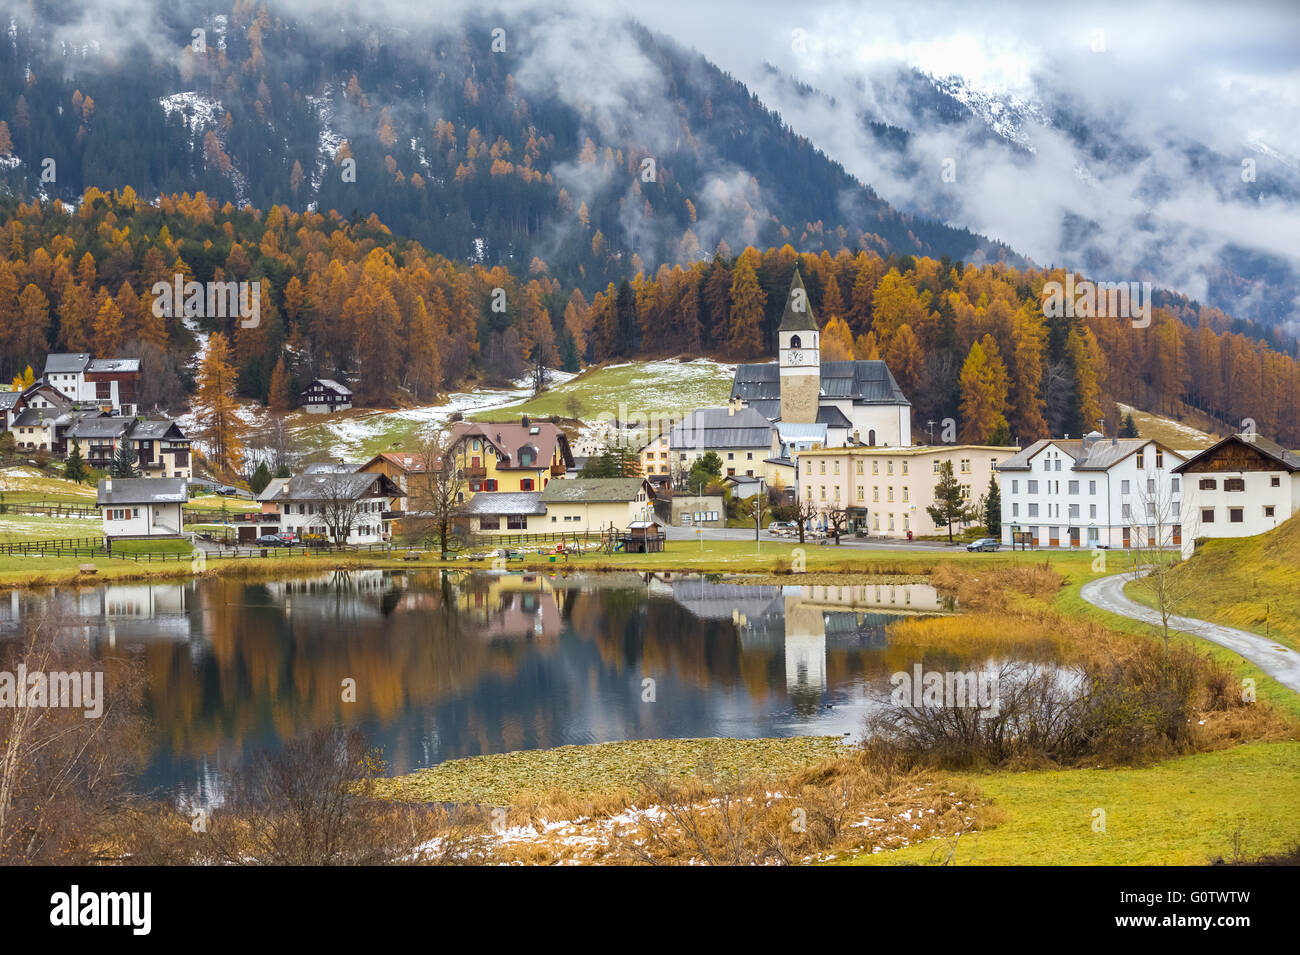 Stunning view of Lai Da Tarasp near Scuol in Engardin, Graubunden (Grisons) of Switzerland. Stock Photo